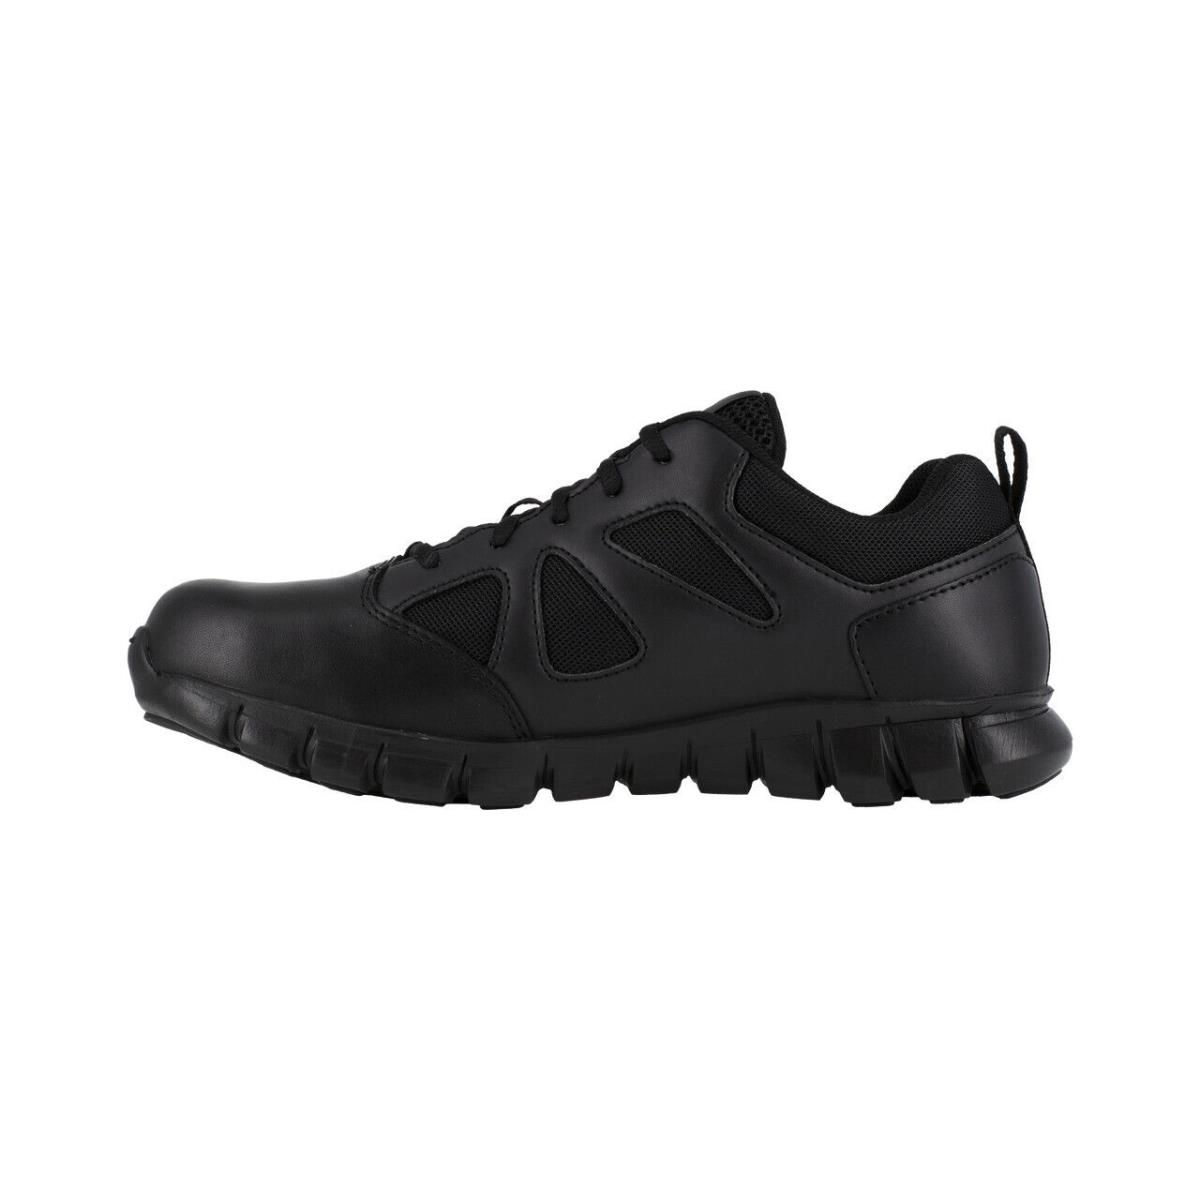 Reebok Sublite Cushion Tactical Men`s Shoe Black Boots RB8105 - All Sizes 8